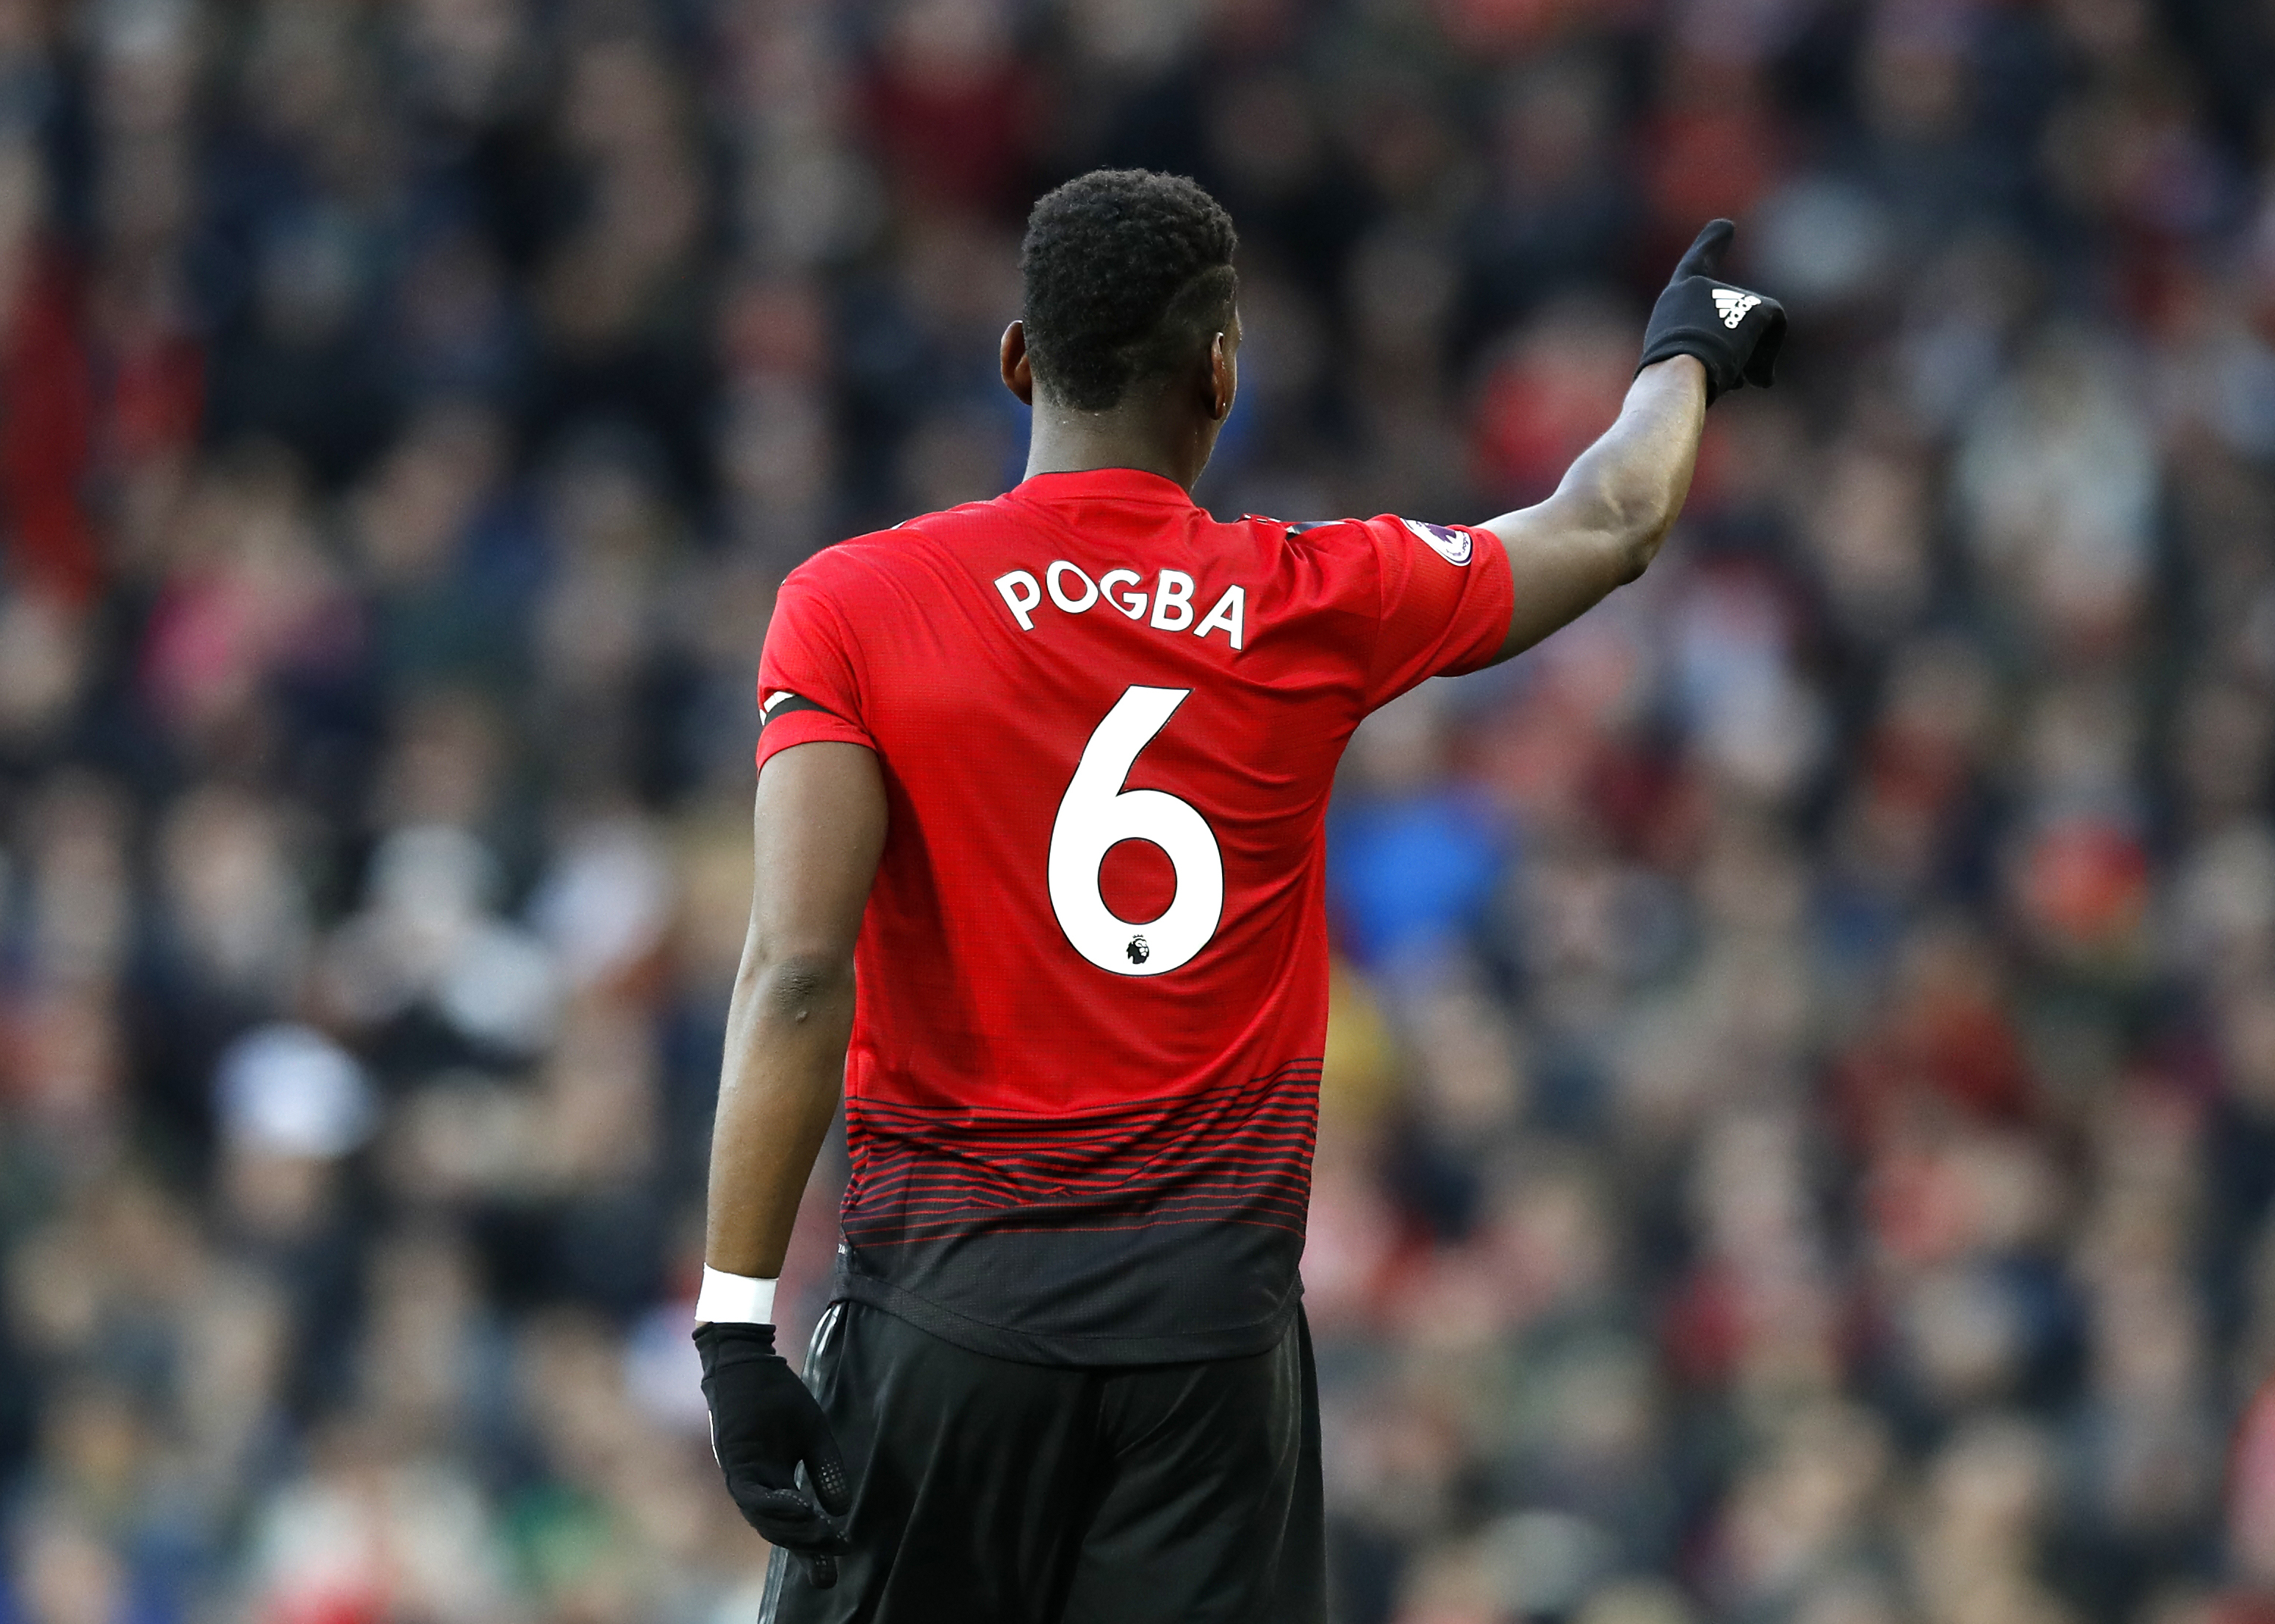 Manchester United's Paul Pogba